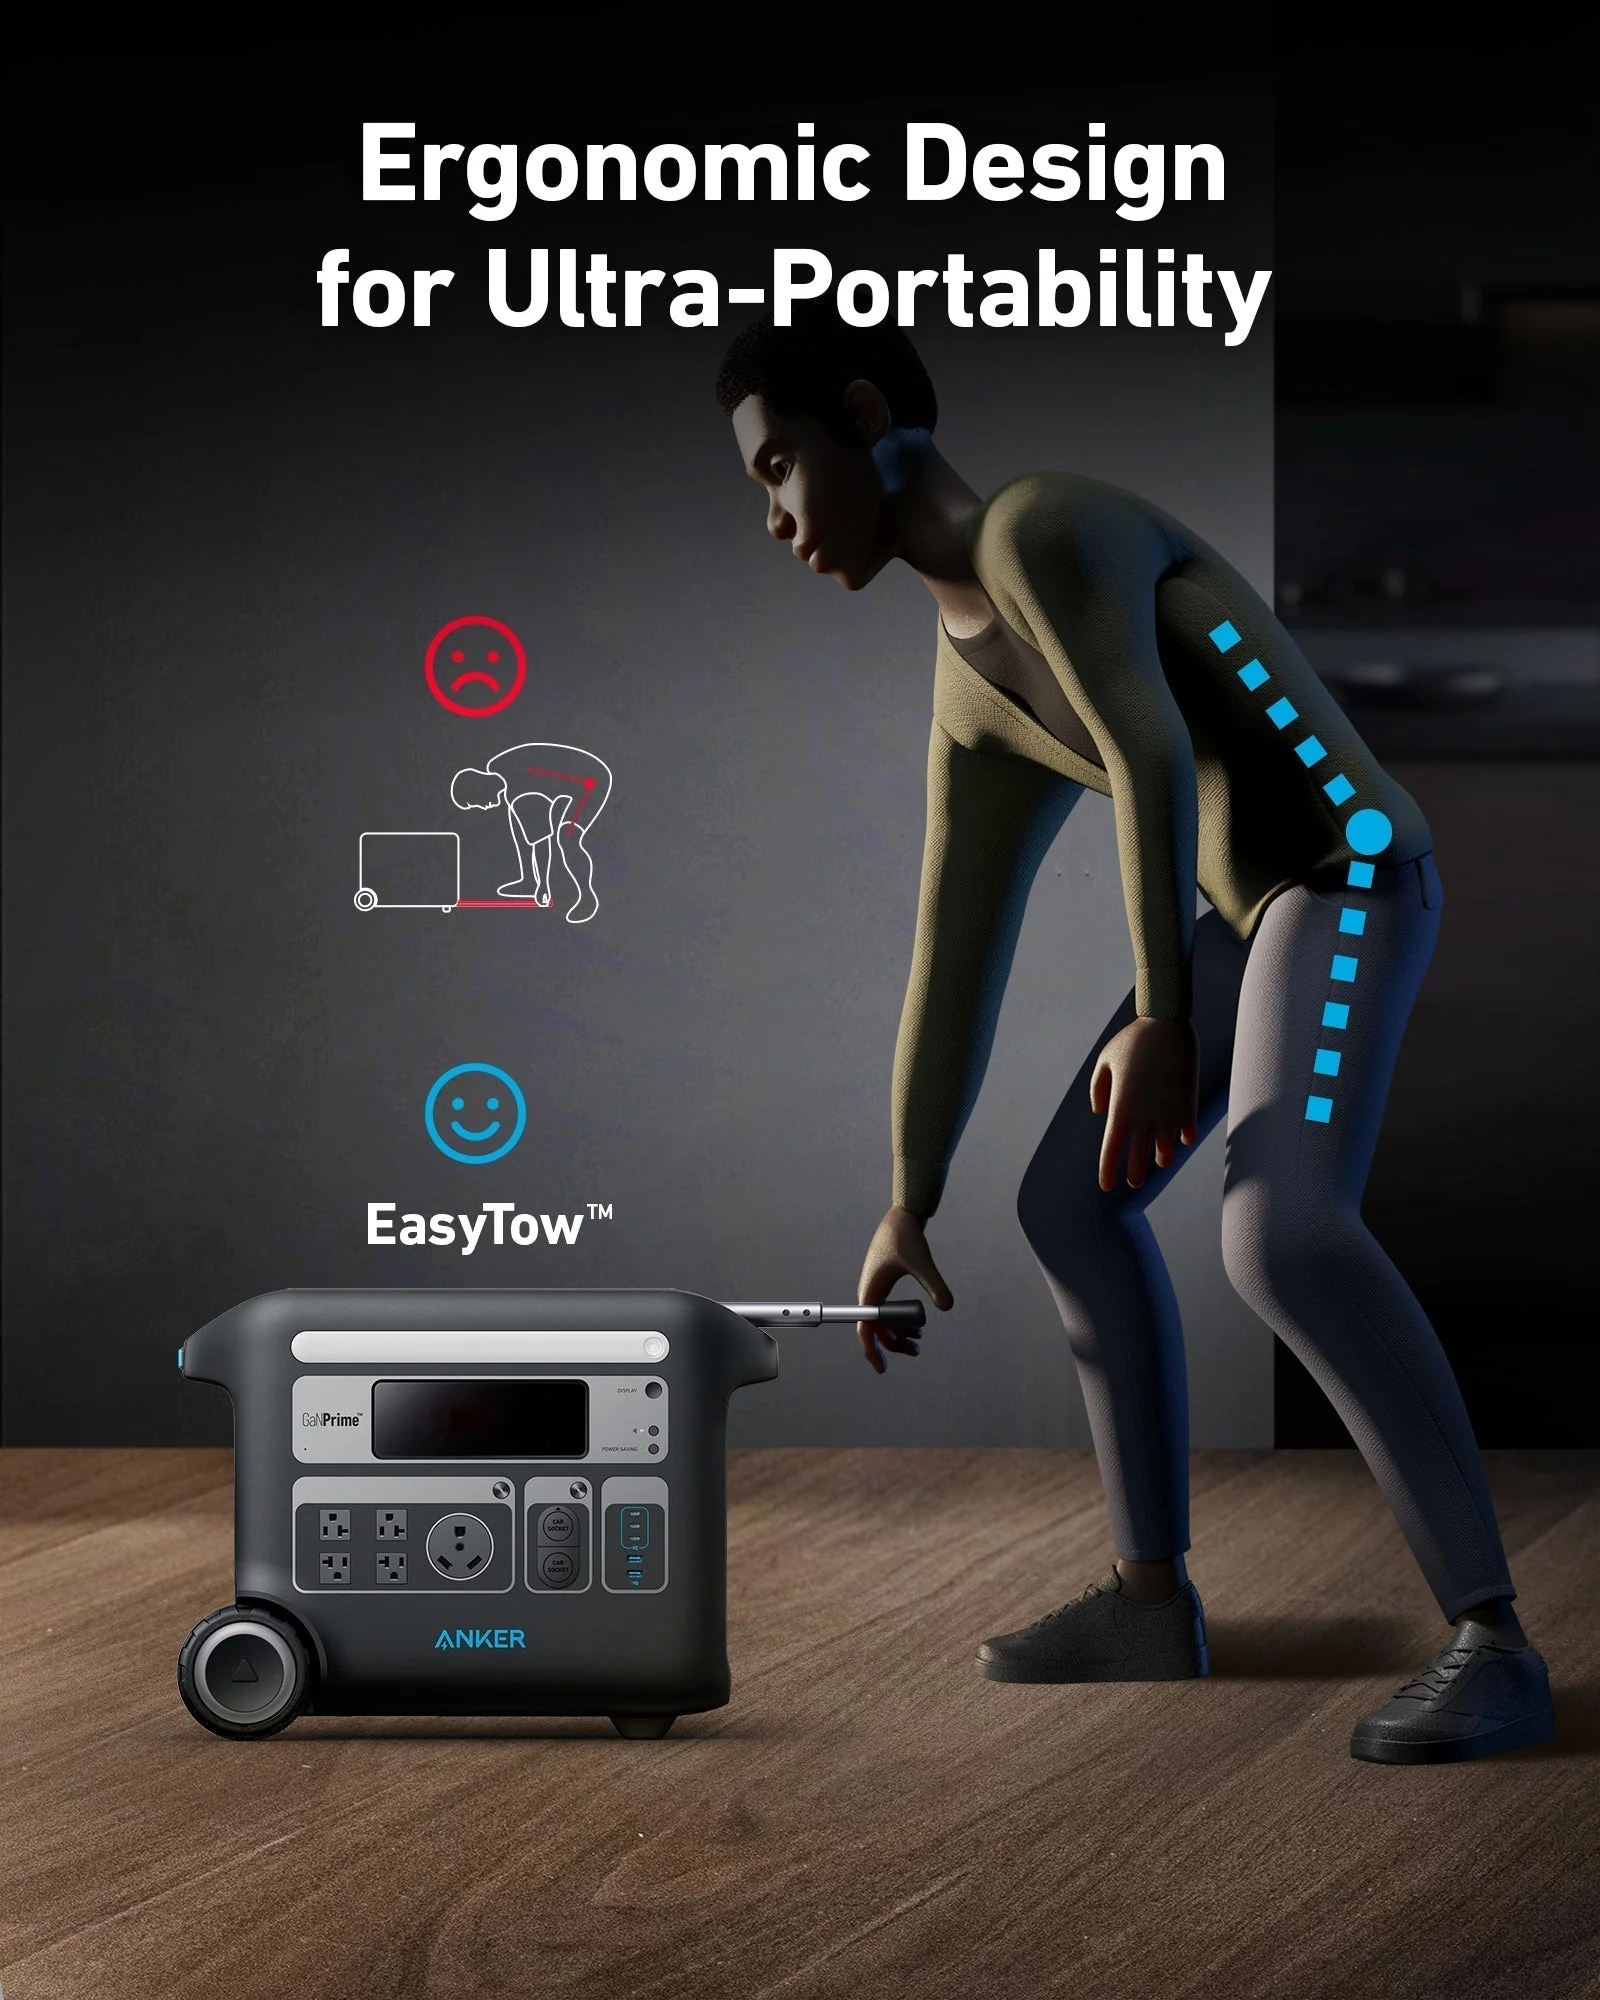 Ergonomic design for ultra-portability ideal for emergency food storage.